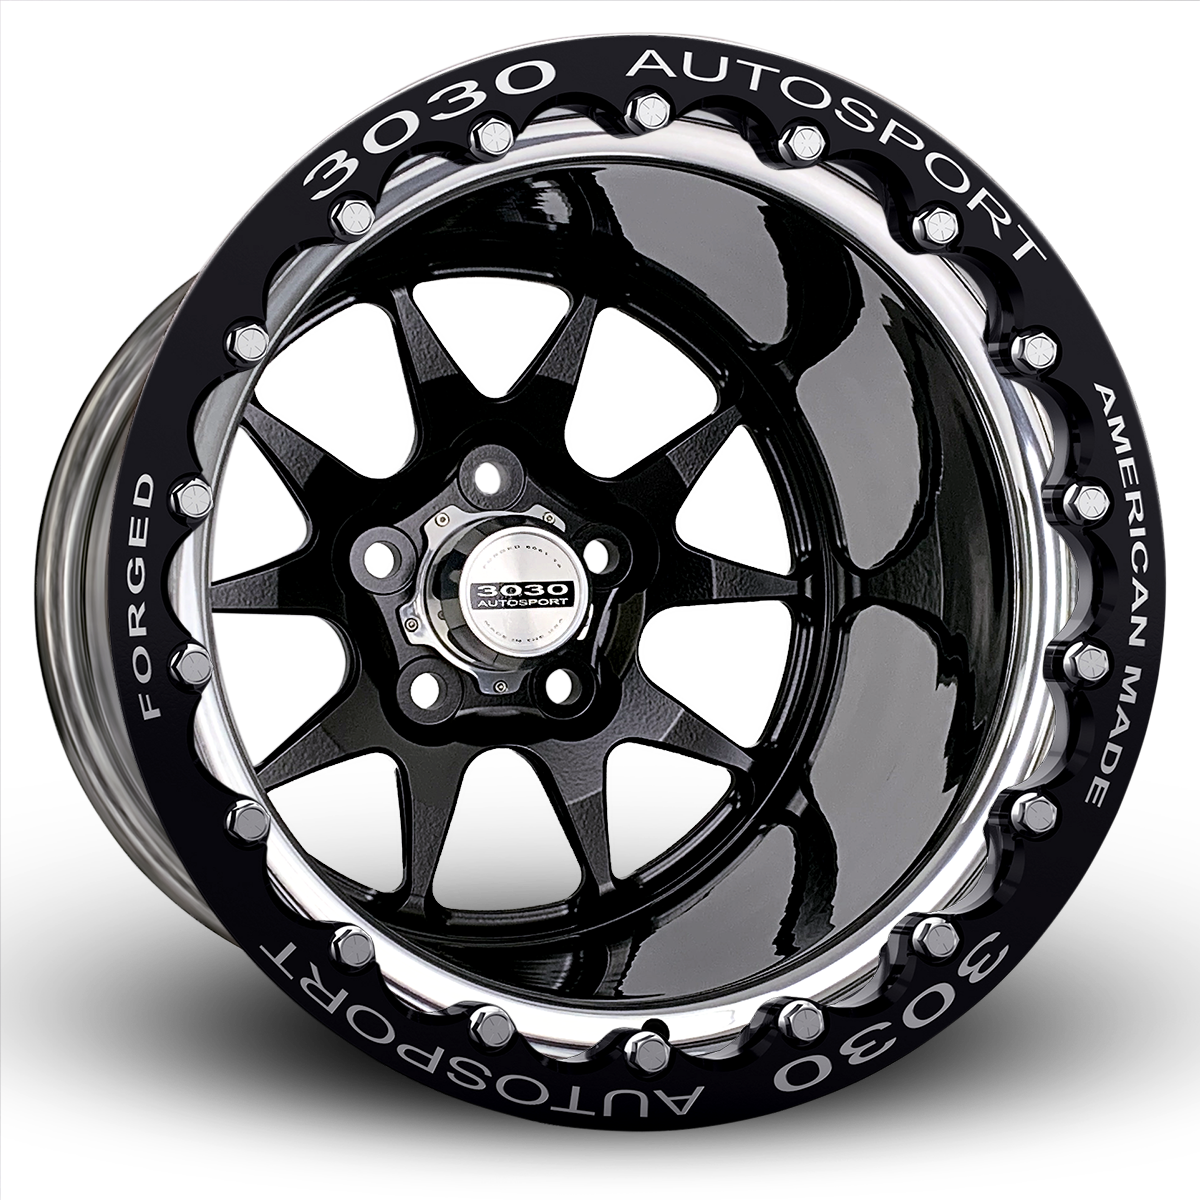 MACH-10 Double-Beadlock Wheel, Size: 15x15", Bolt Pattern: 5x4.5", Backspace: 6" [Black/Polished]